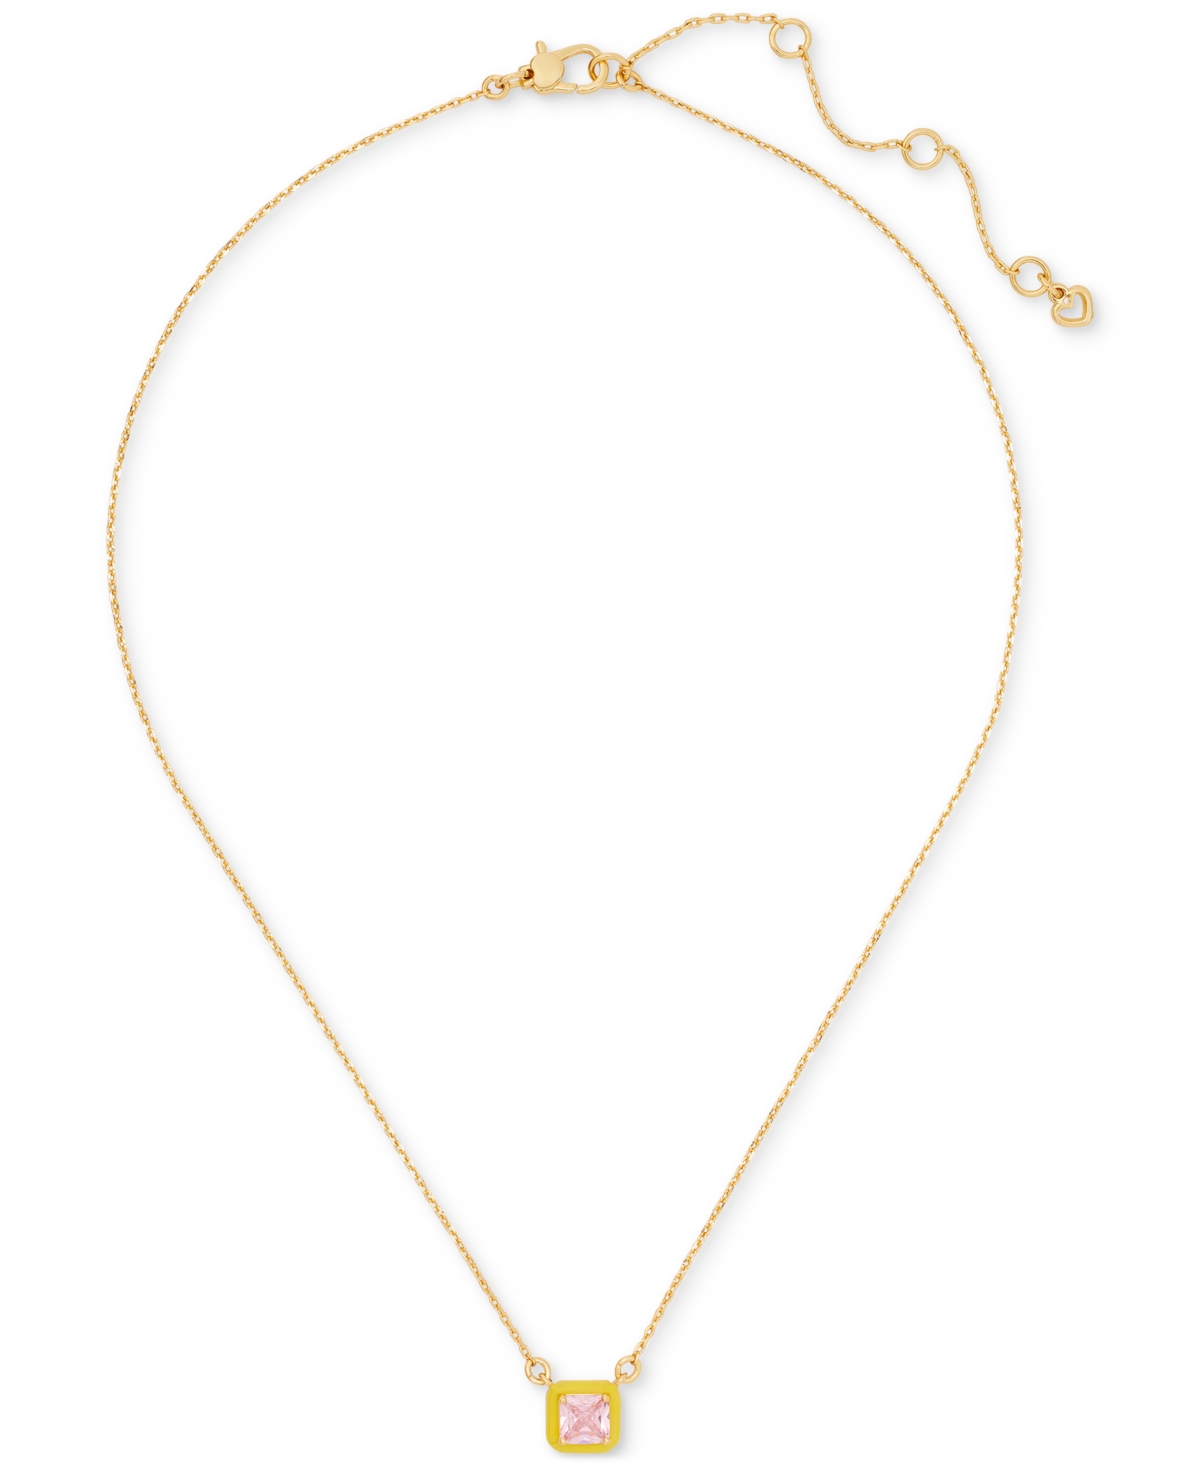 Gold-Tone Color Framed Square Cubic Zirconia Pendant Necklace, 16" + 3" extender - Light Pink